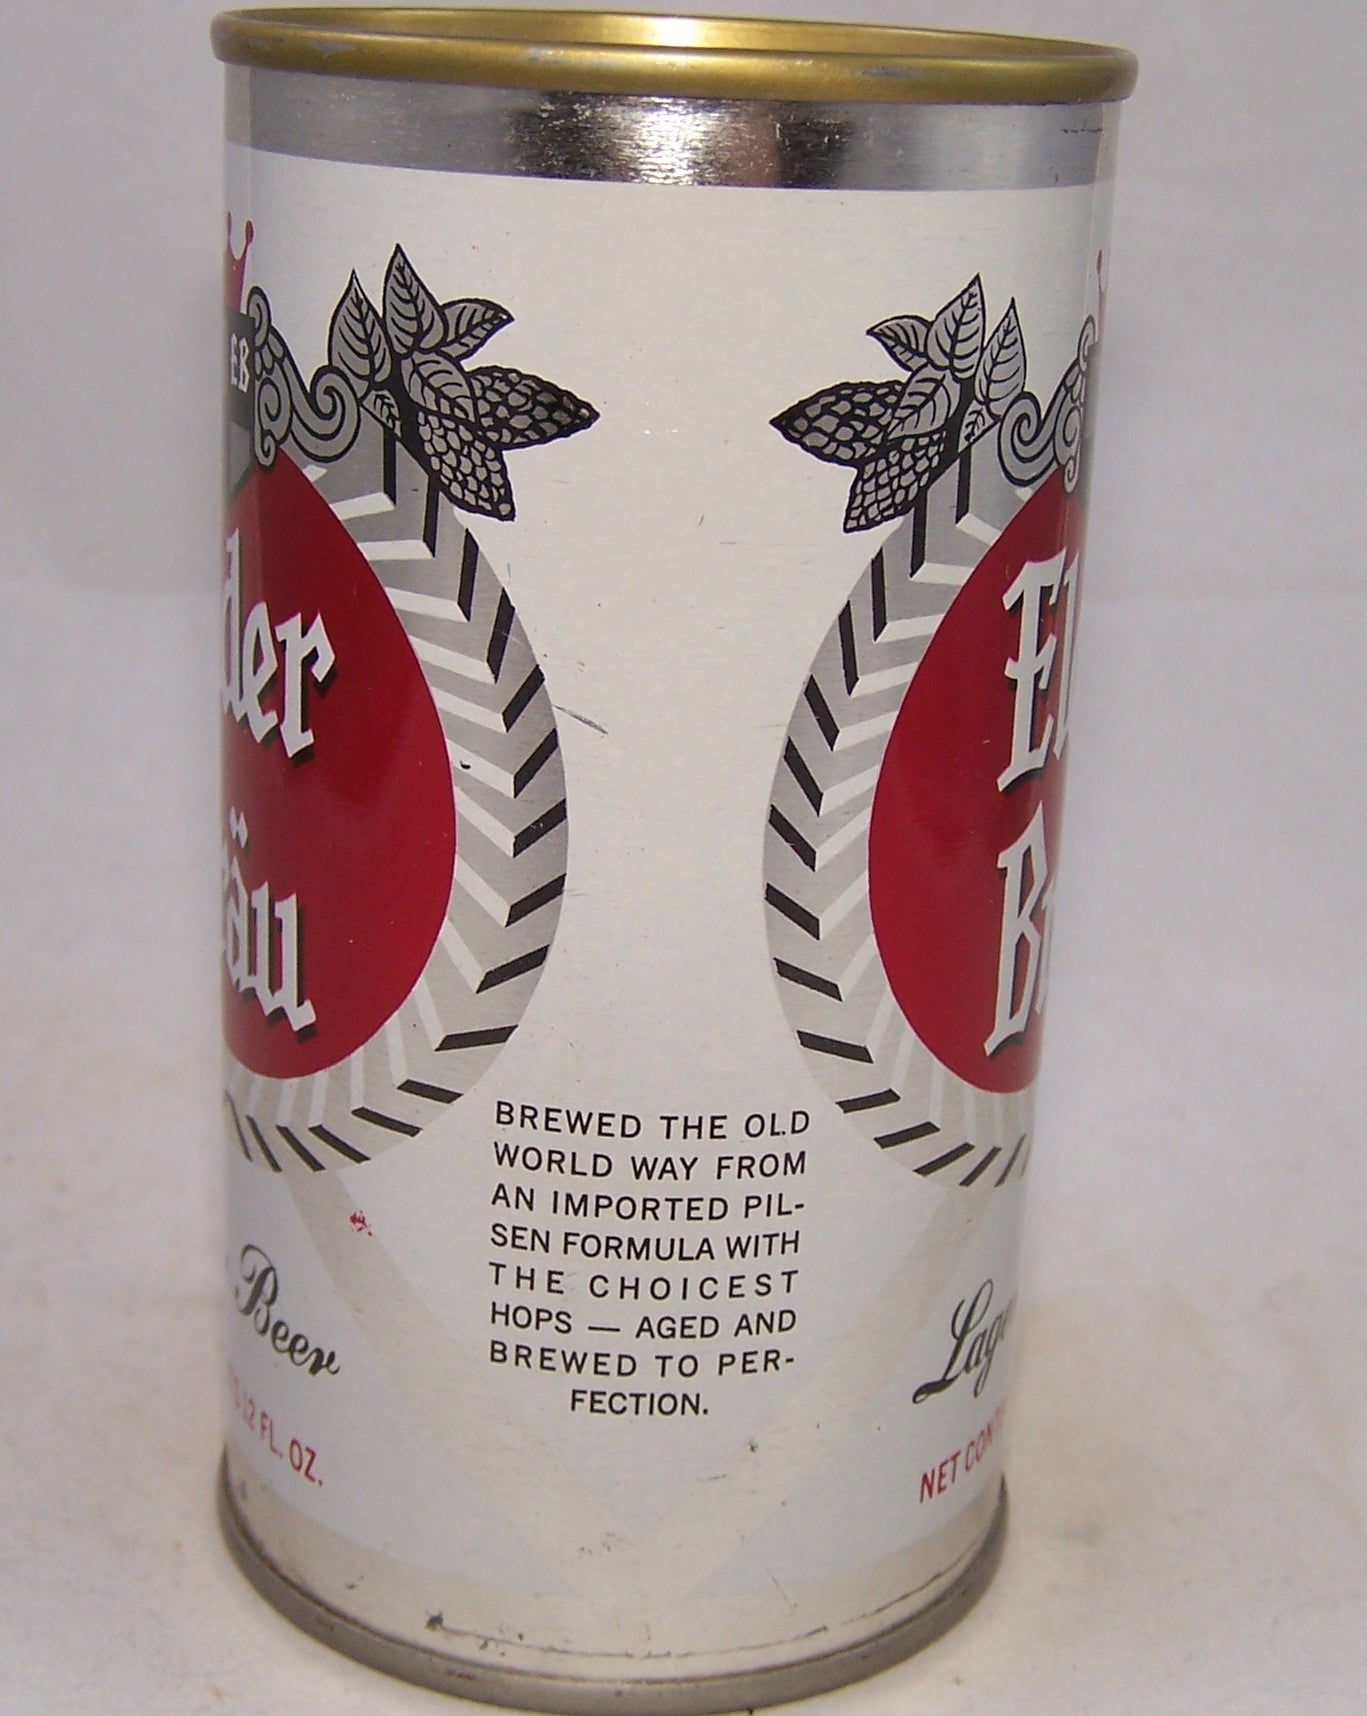 Elder Brau Lager Beer, USBC 59-27, Grade 1 to 1/1+